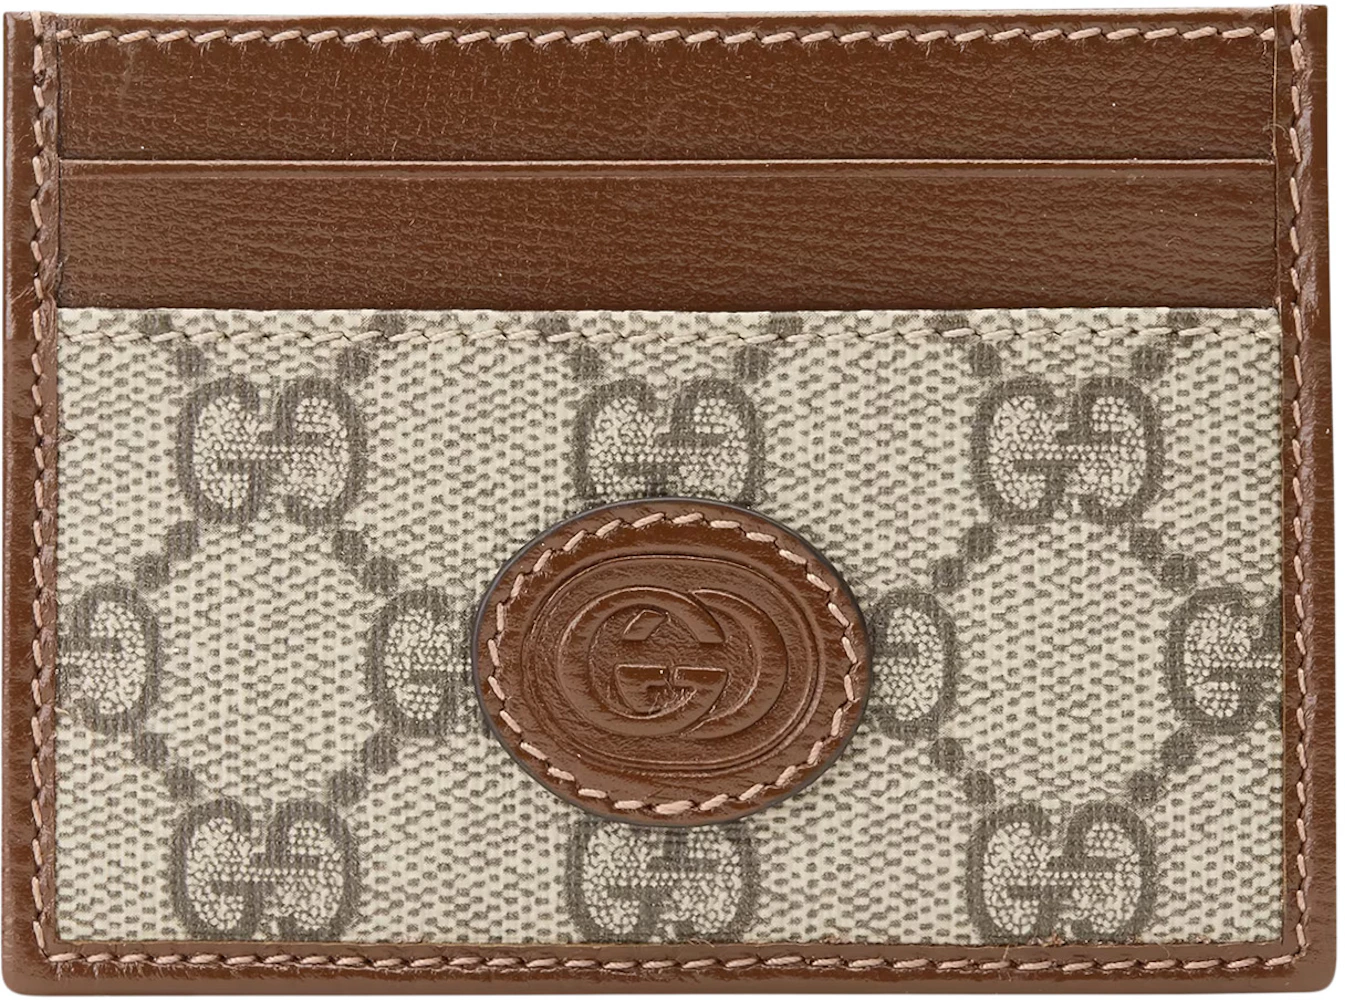 Mini wallet with Interlocking G in black GG Supreme